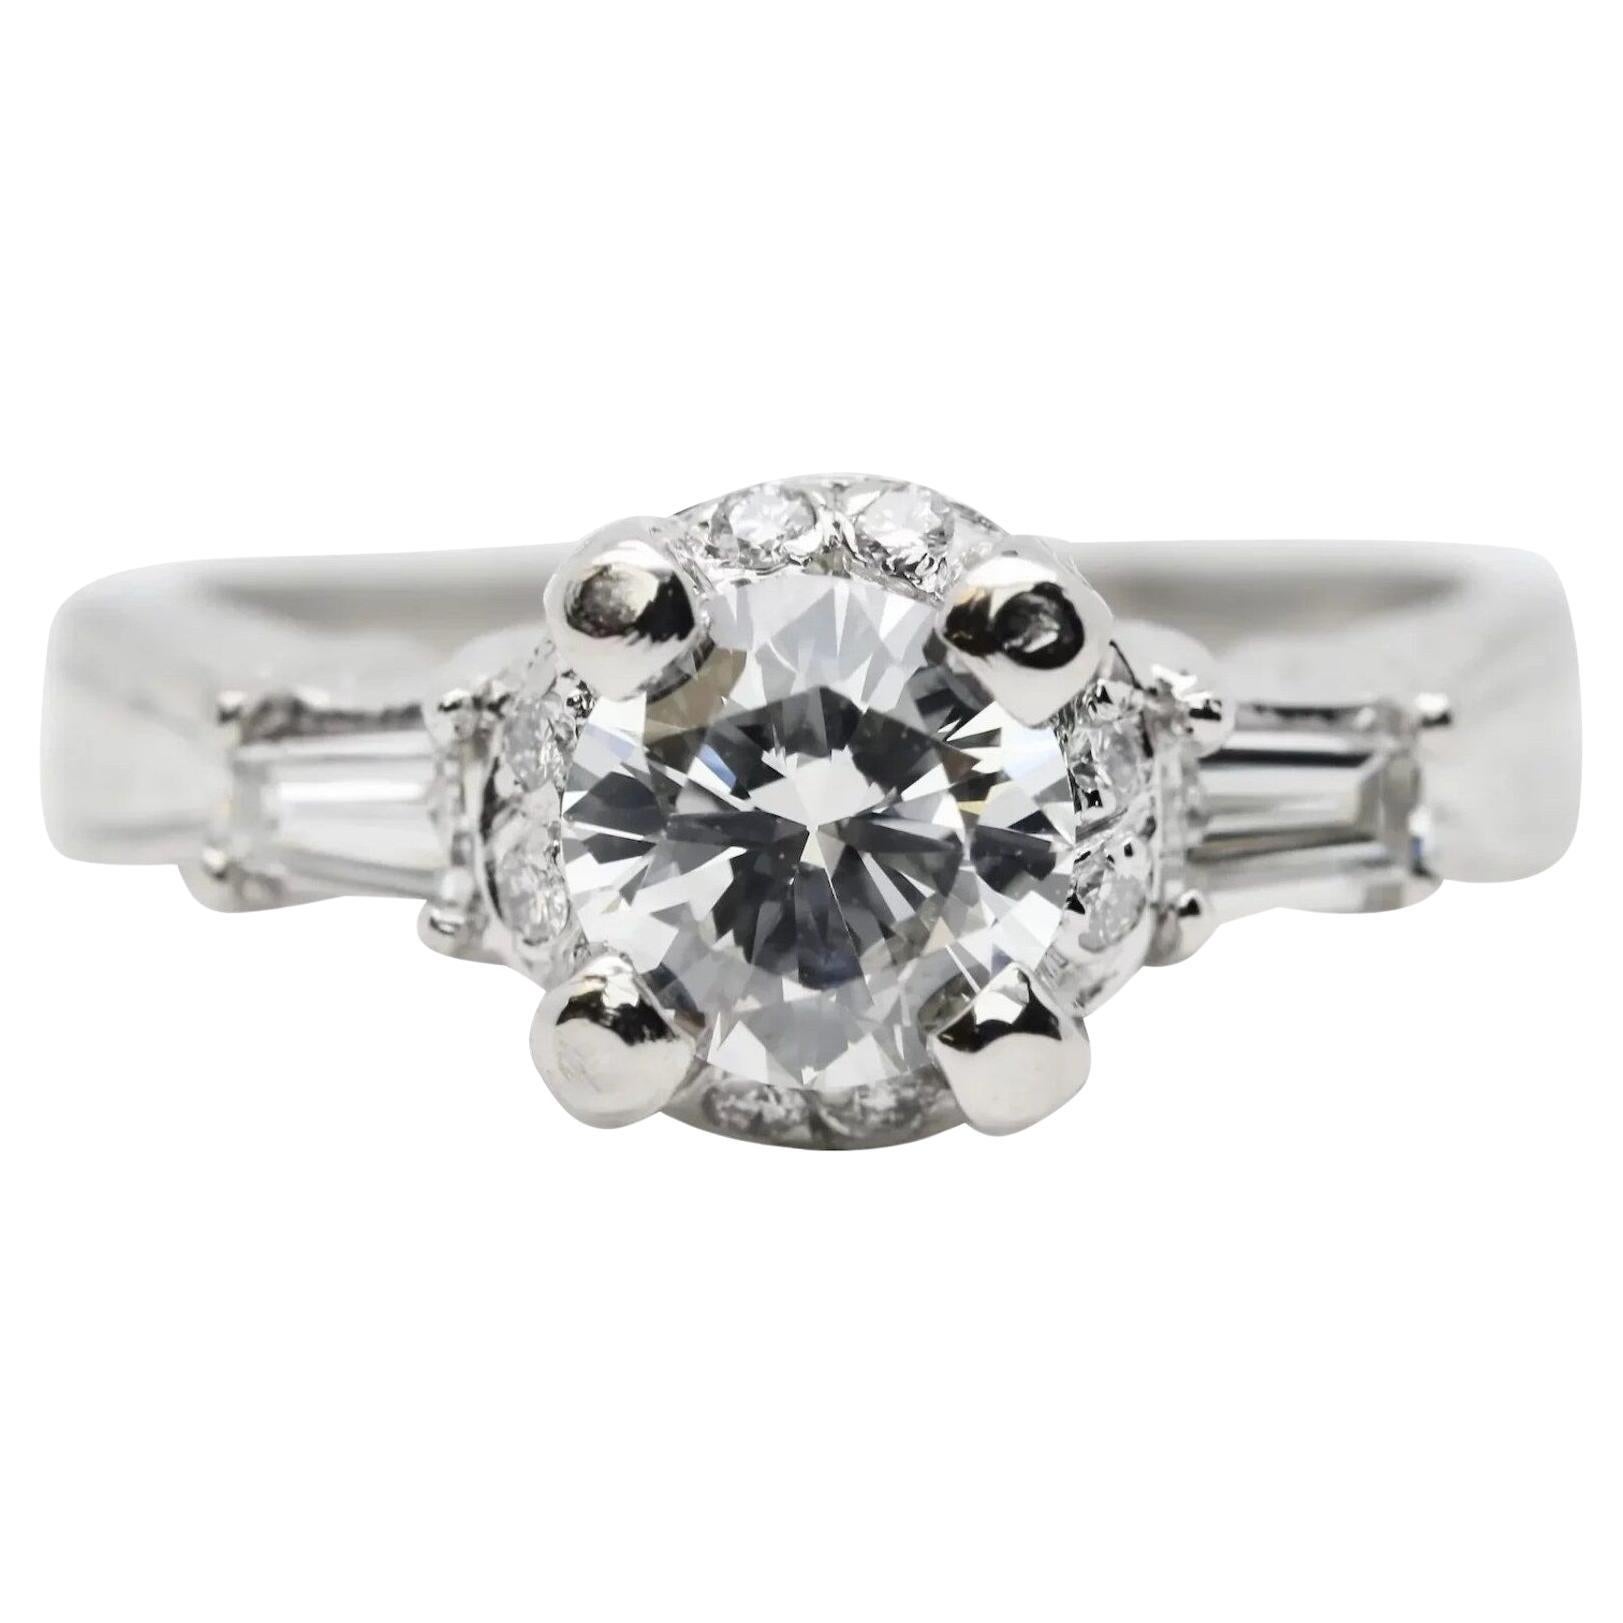 Classic 1.13ctw Diamond Engagement Ring in Platinum Halo Mounting